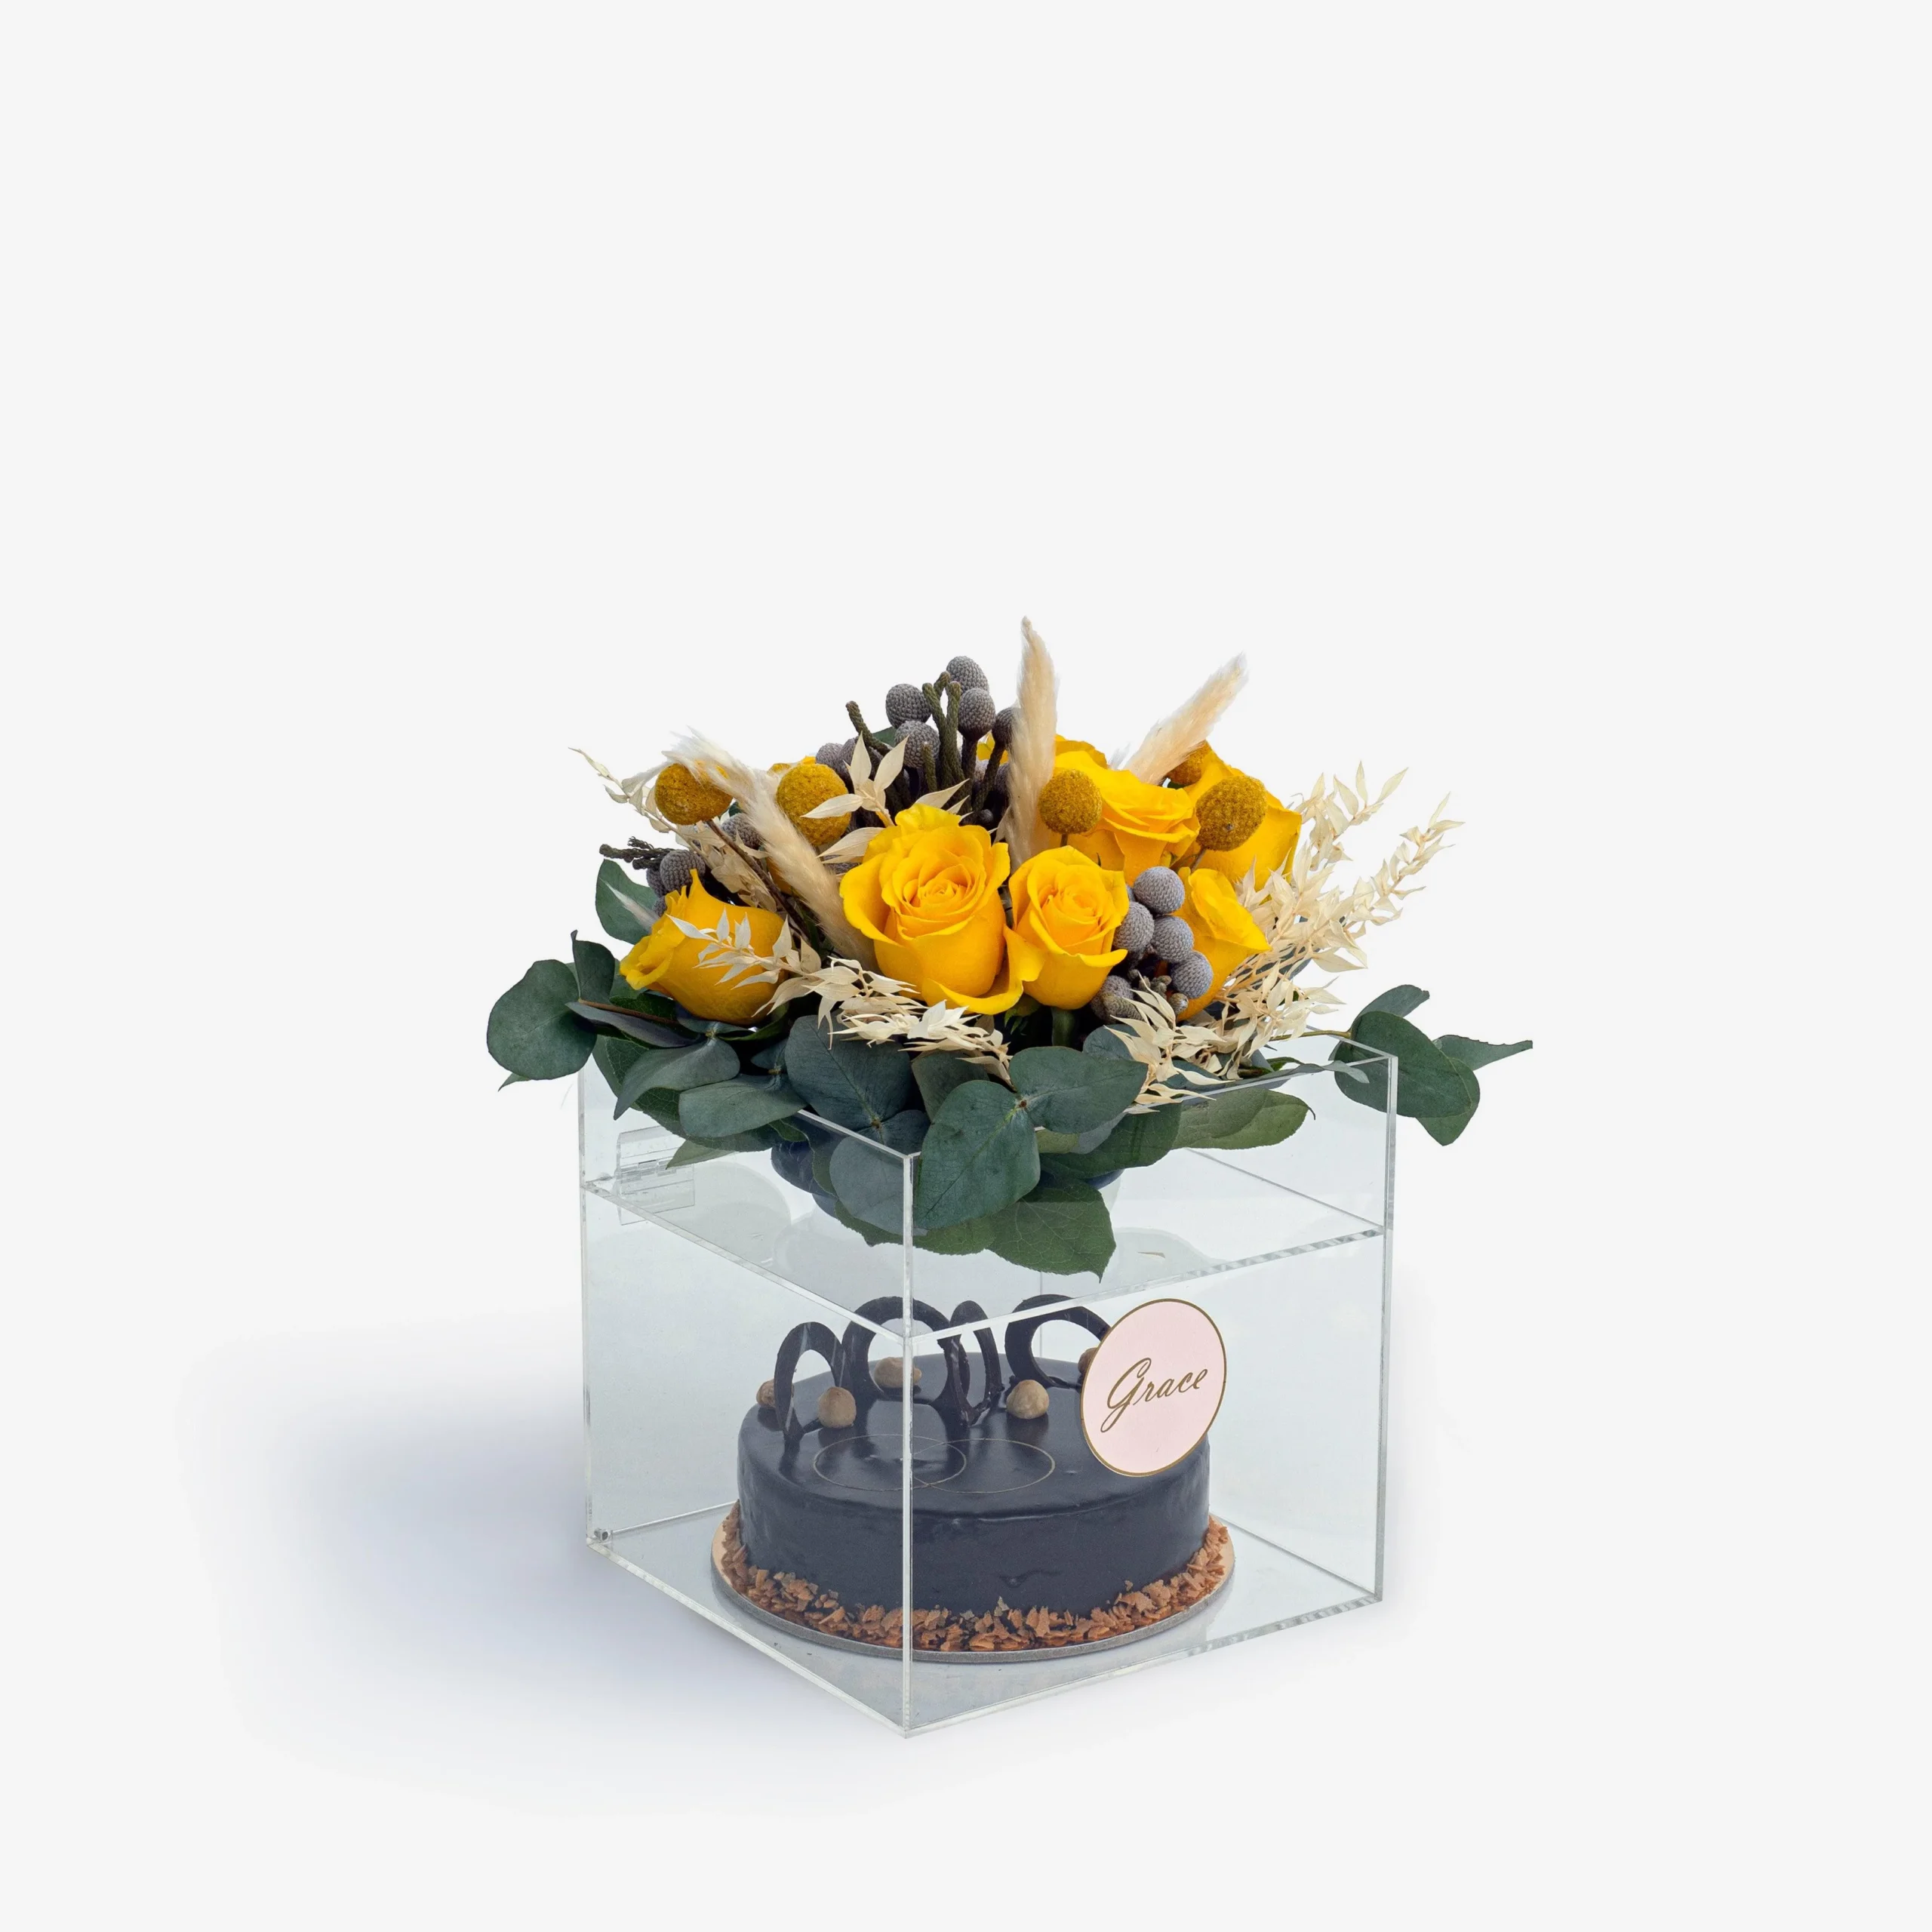 Soho flower with Cakes